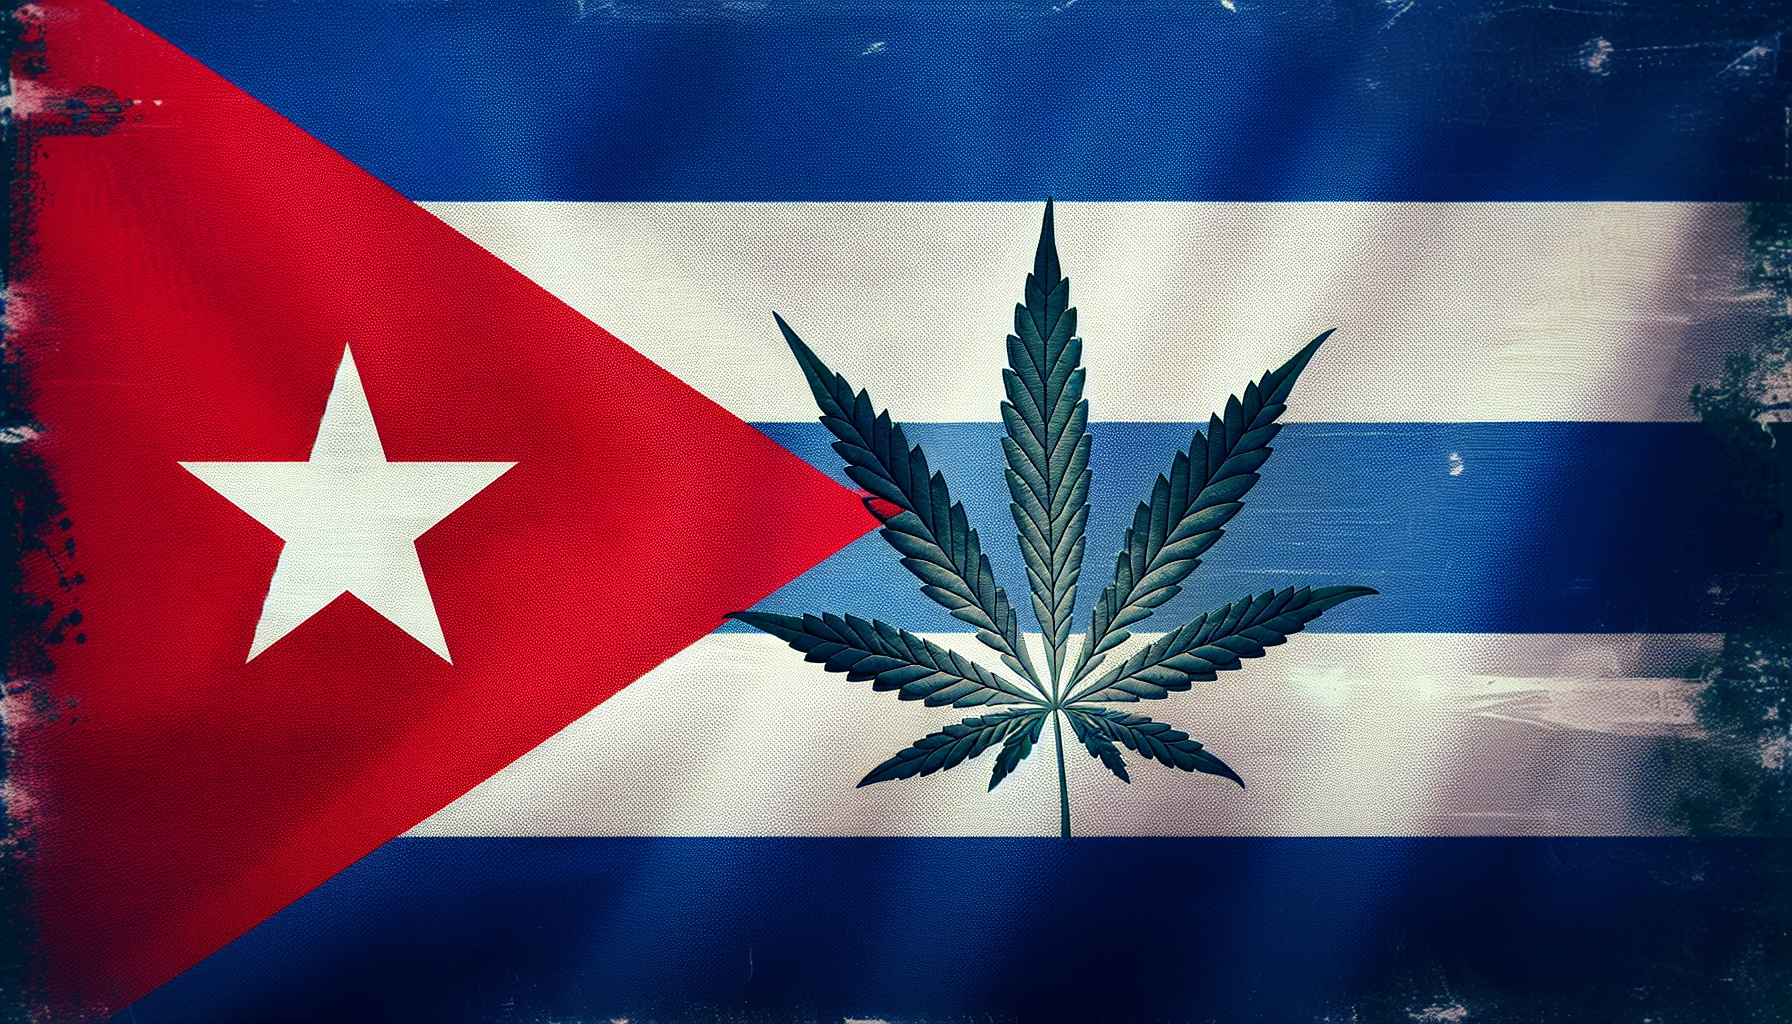 Cuban flag with cannabis leaf